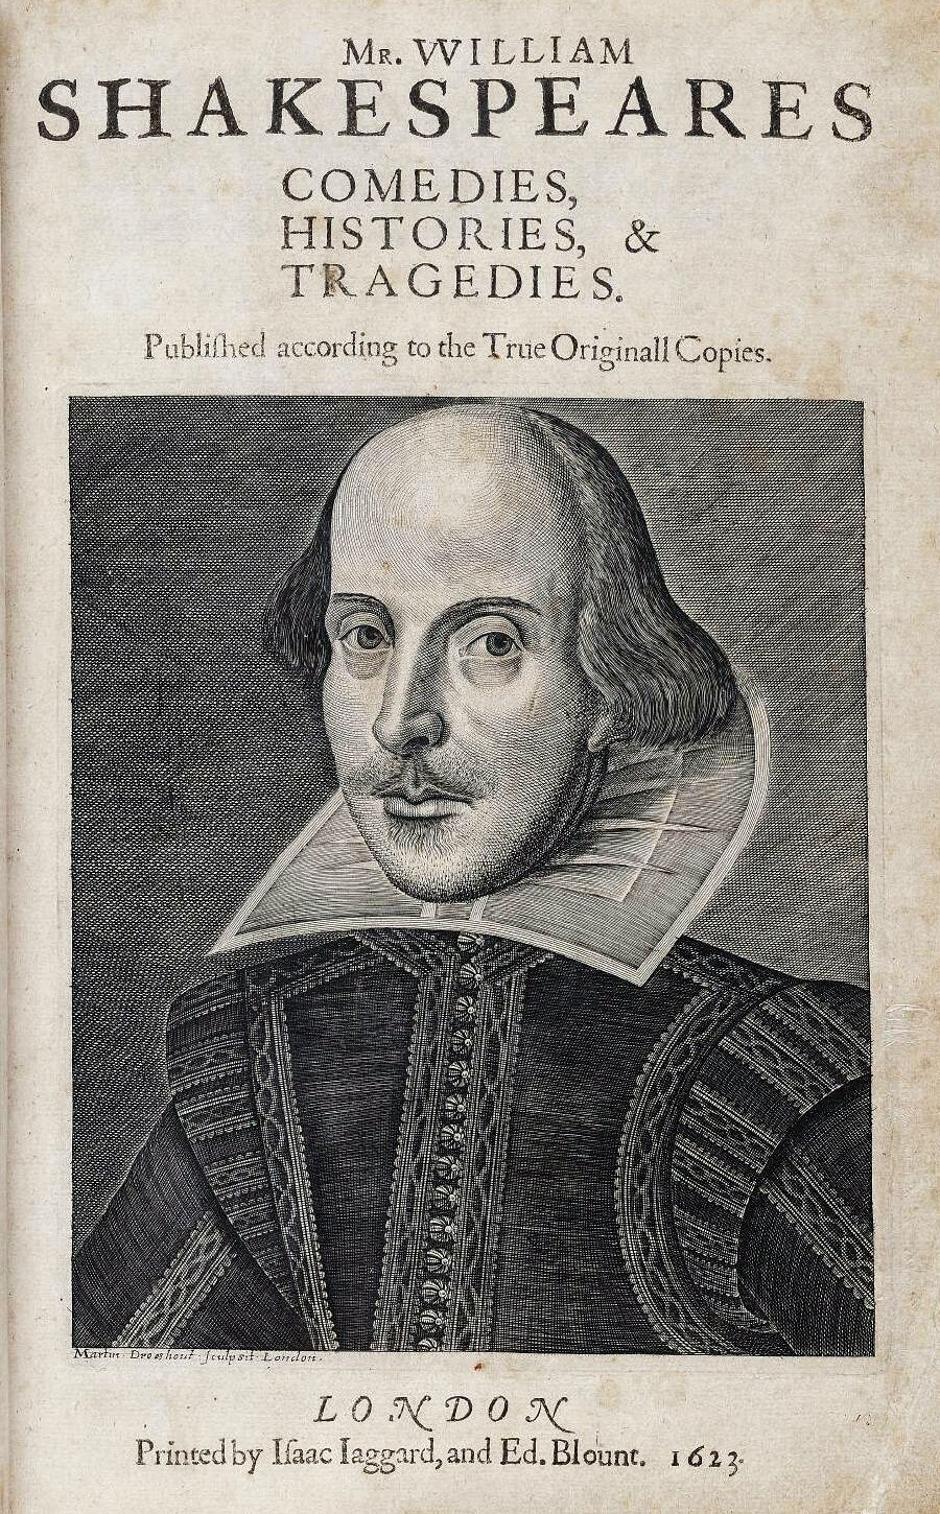 William Shakespeare | Author: Wikipedia